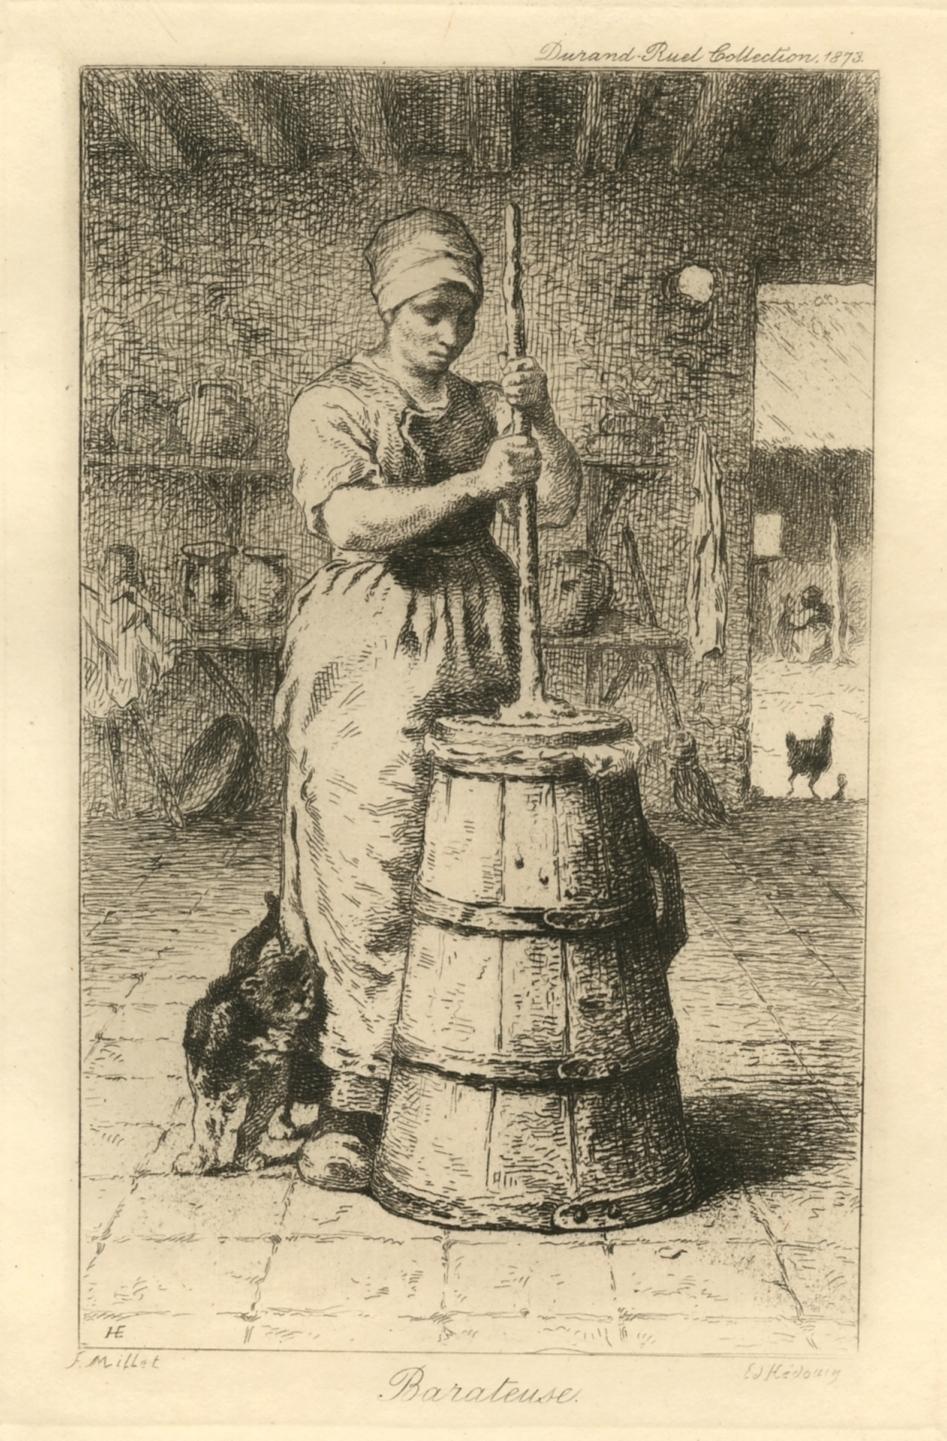 "Barateuse" etching - Print by (after) Jean François Millet